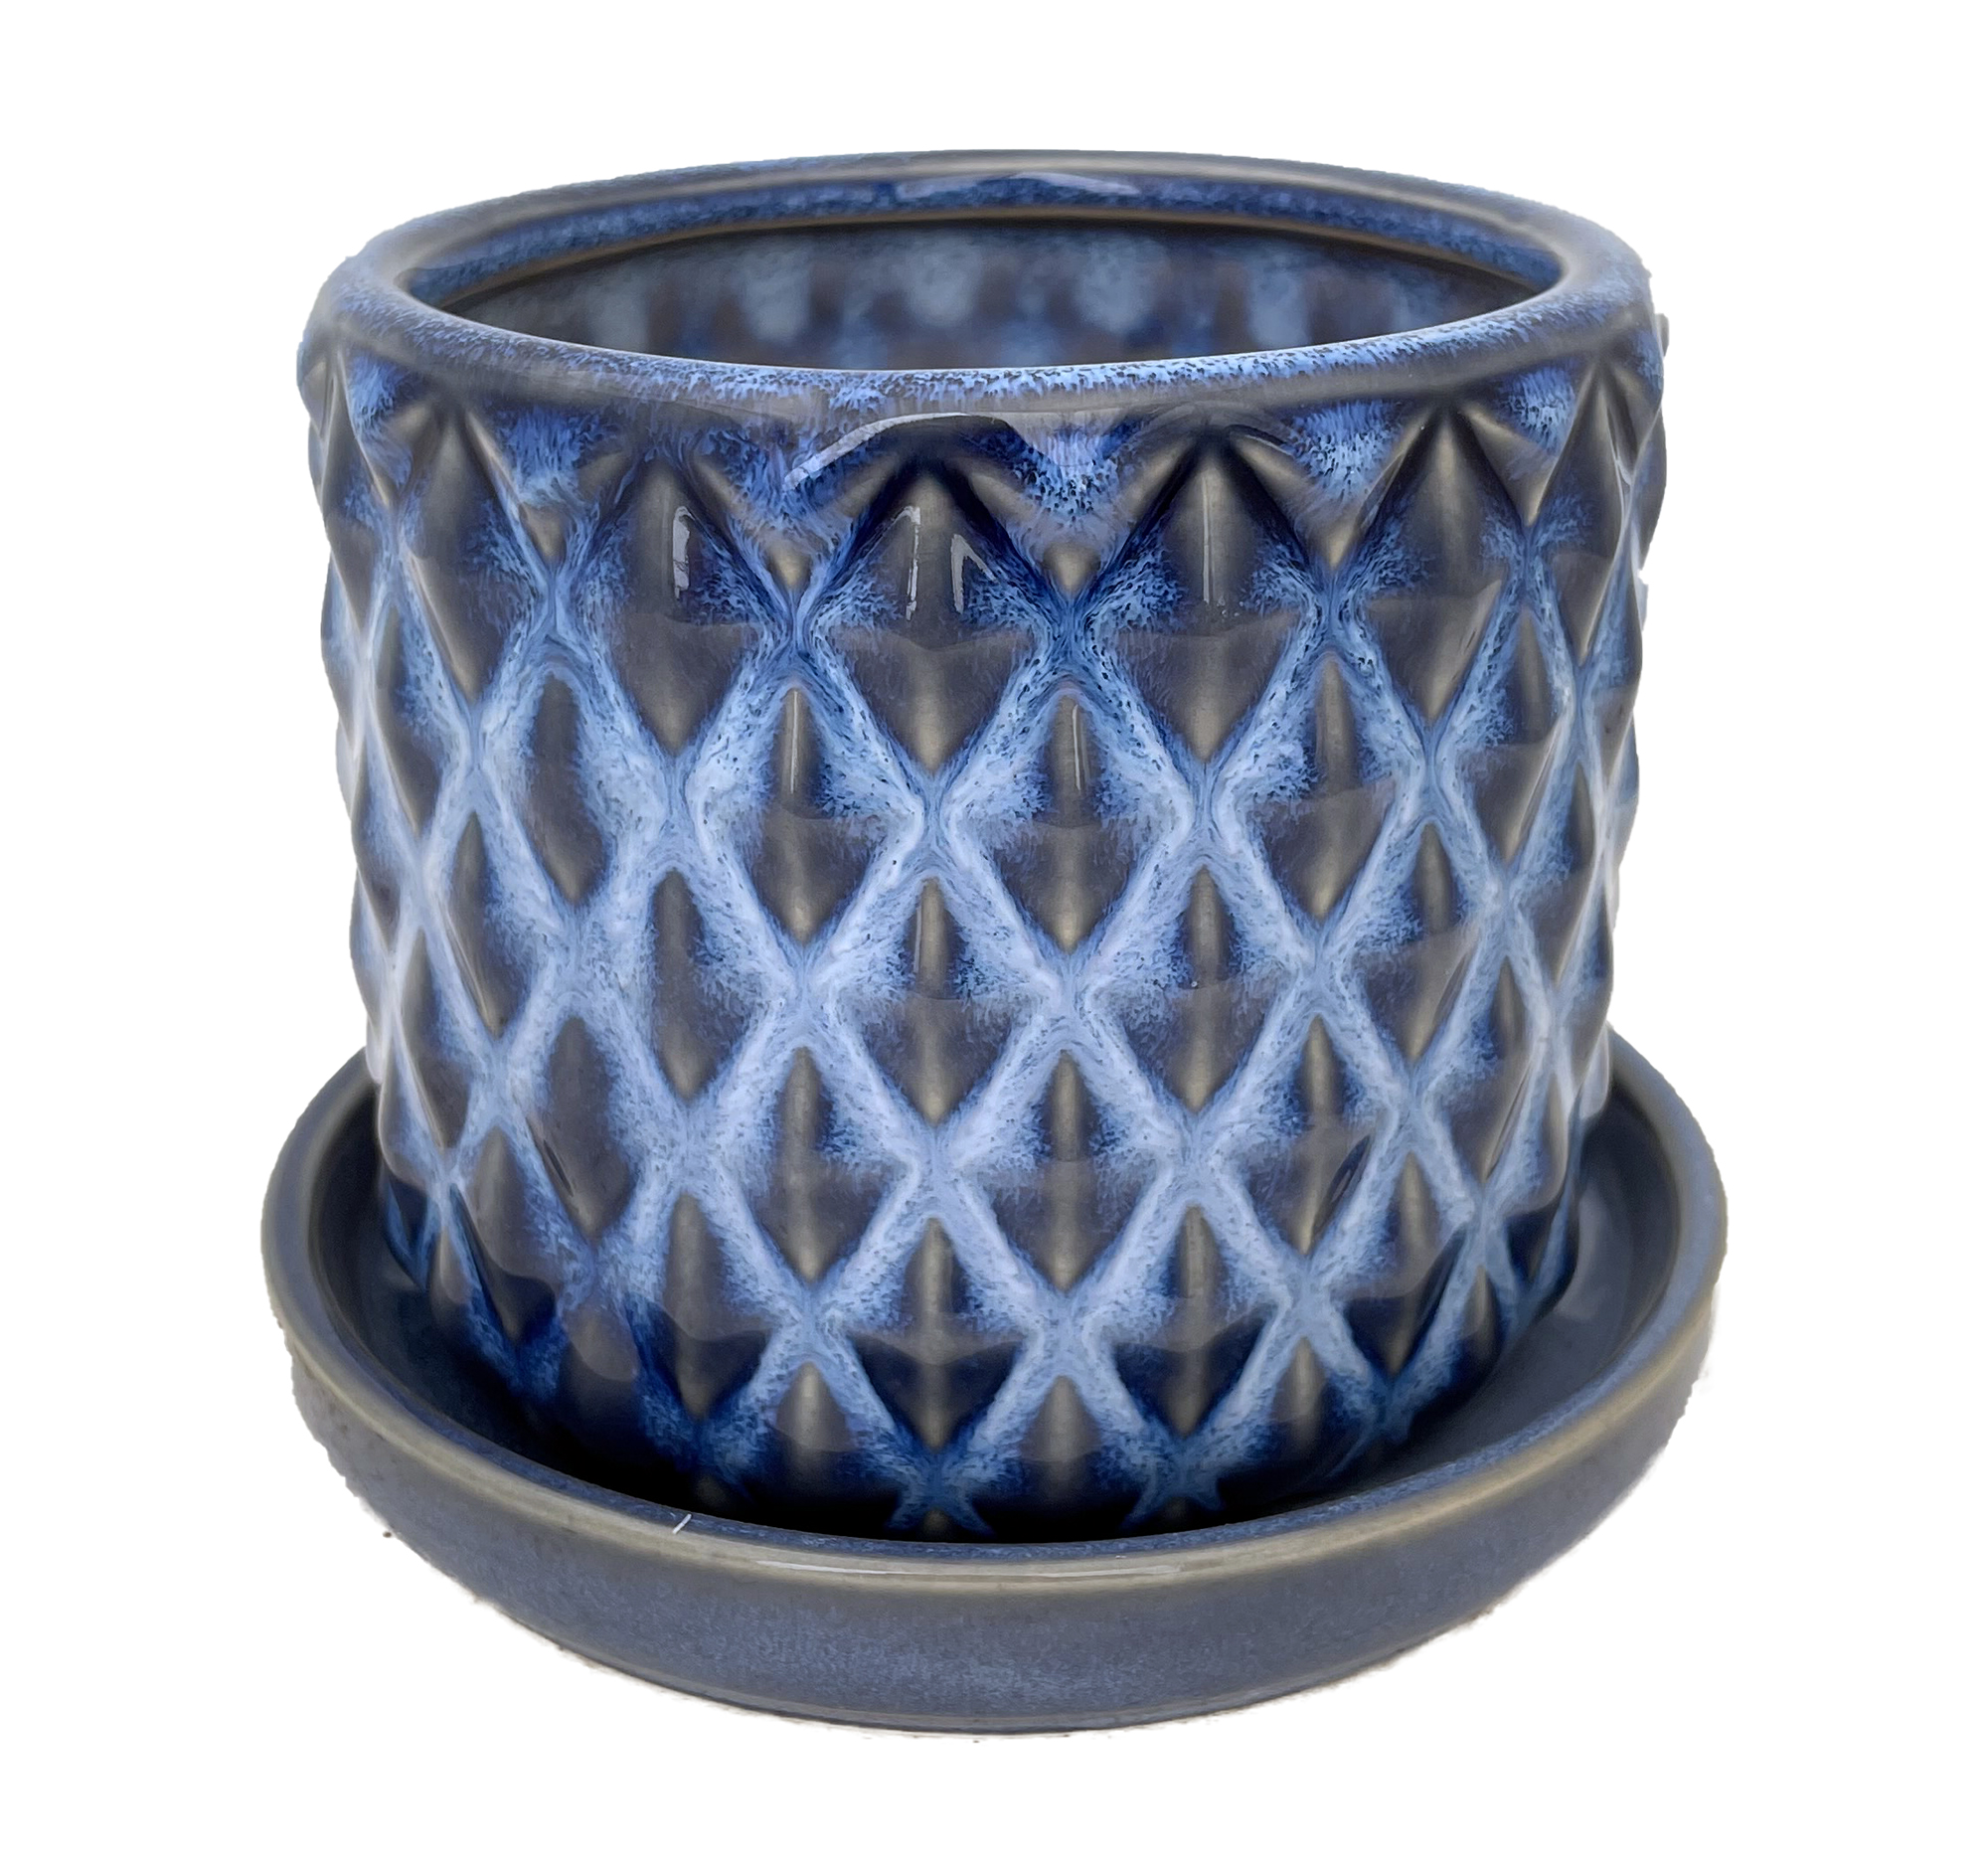 Diamond Blue Ceramic Pot with Attached Saucer - 4.5 x 4.25